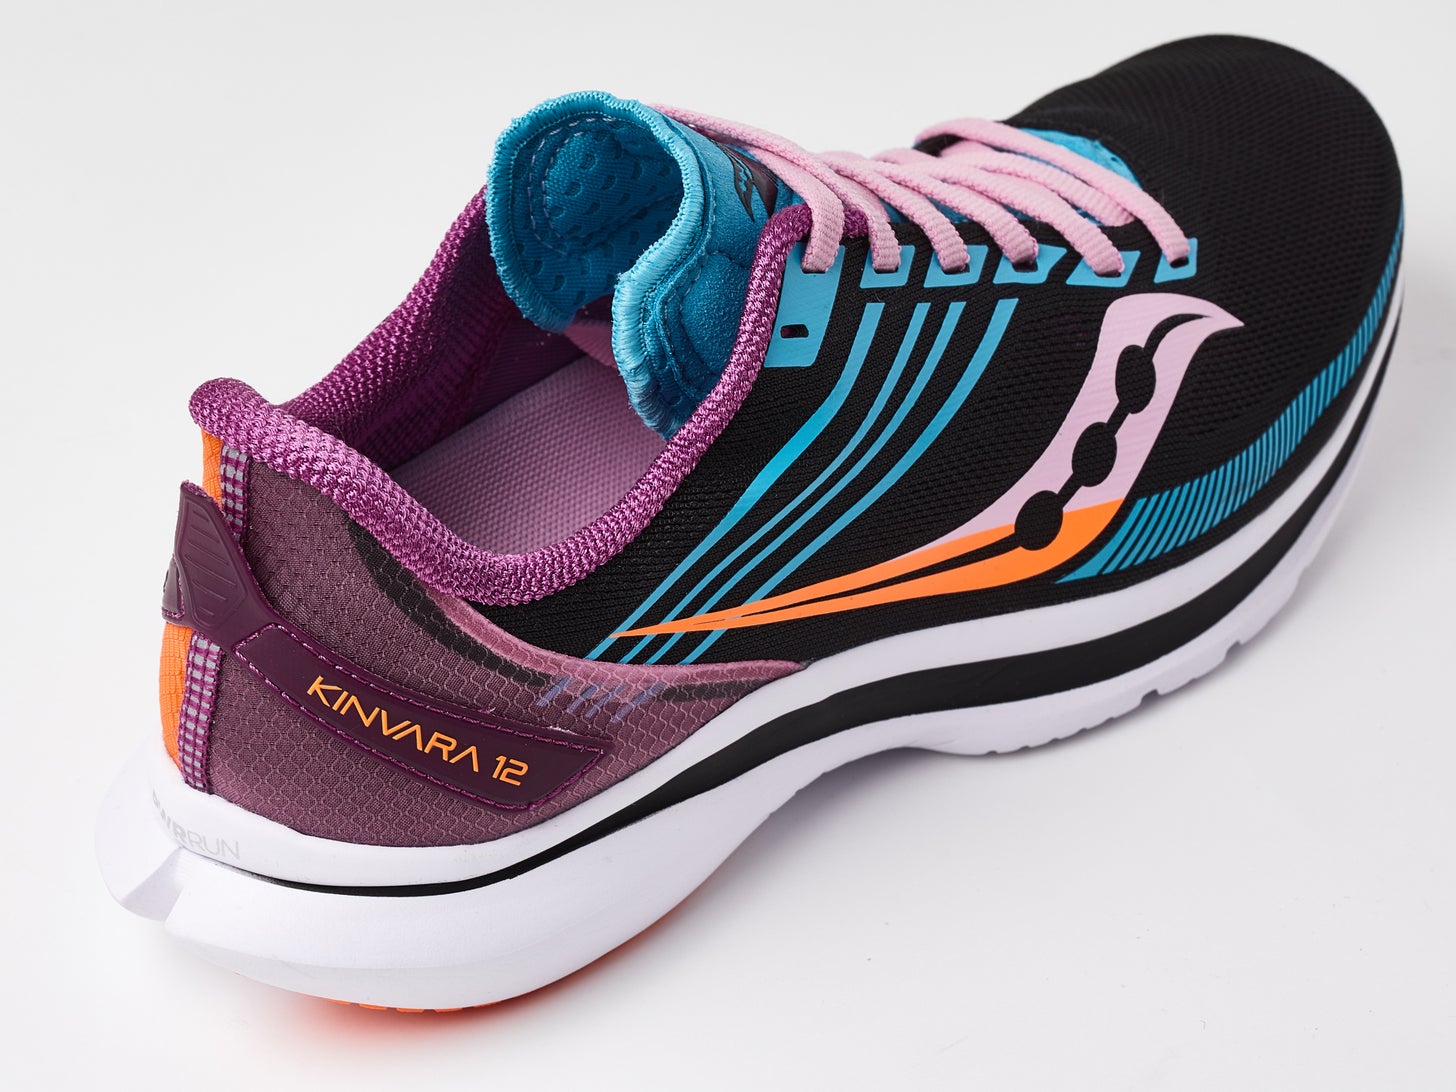 Saucony Kinvara 12 Shoe Review | Running Warehouse Australia